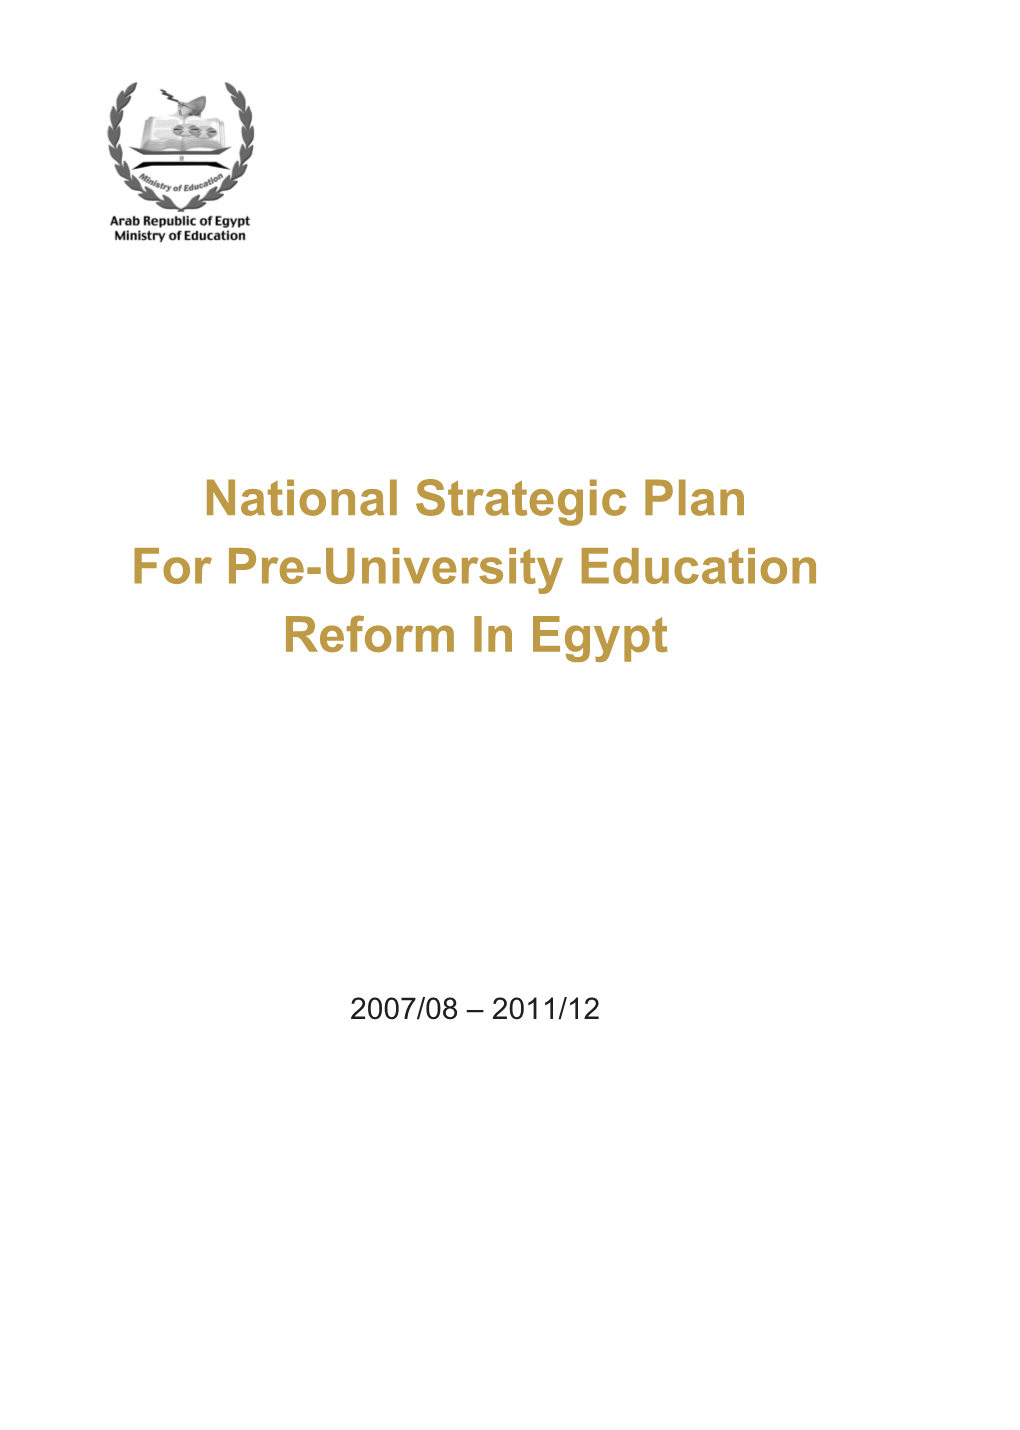 National Strategic Plan for Pre-University Education Reform in Egypt